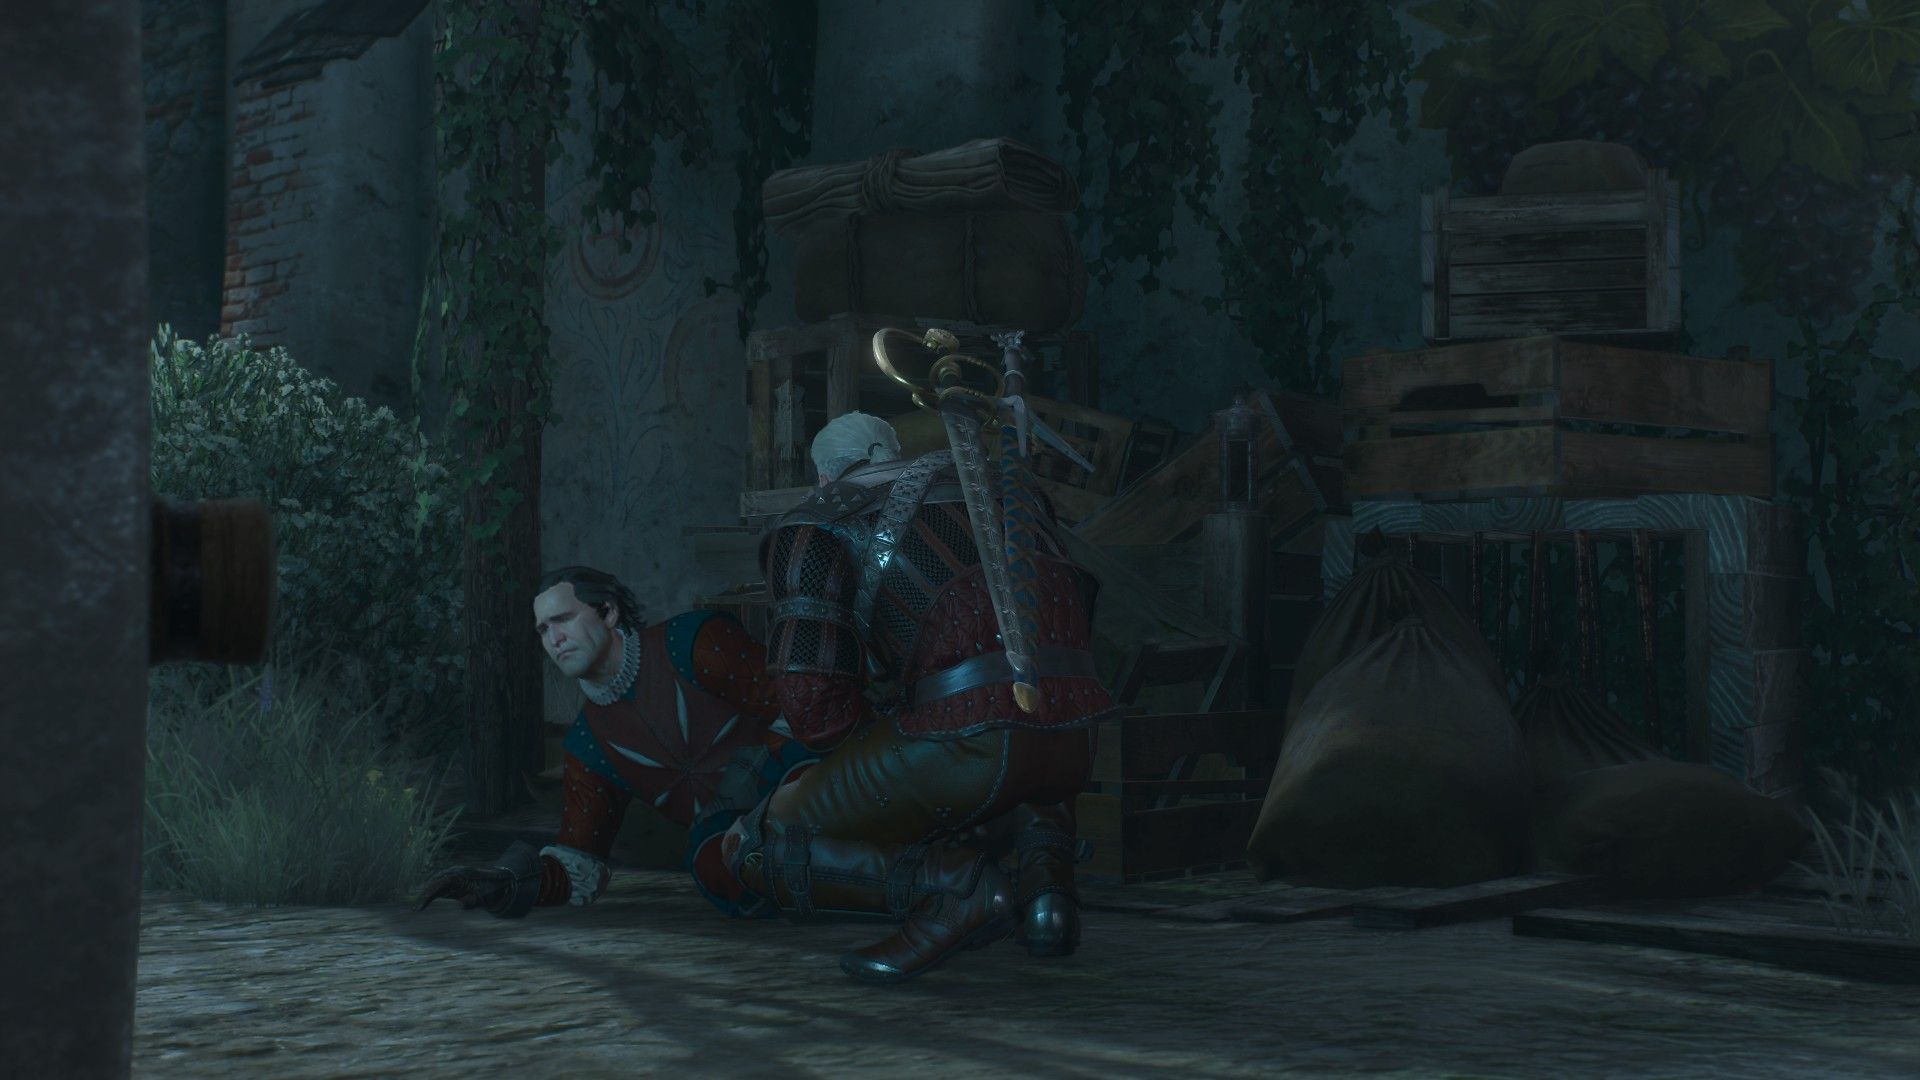 Geralt crouches next to a fallen nobleman during a nighttime assault on the latter's castle.